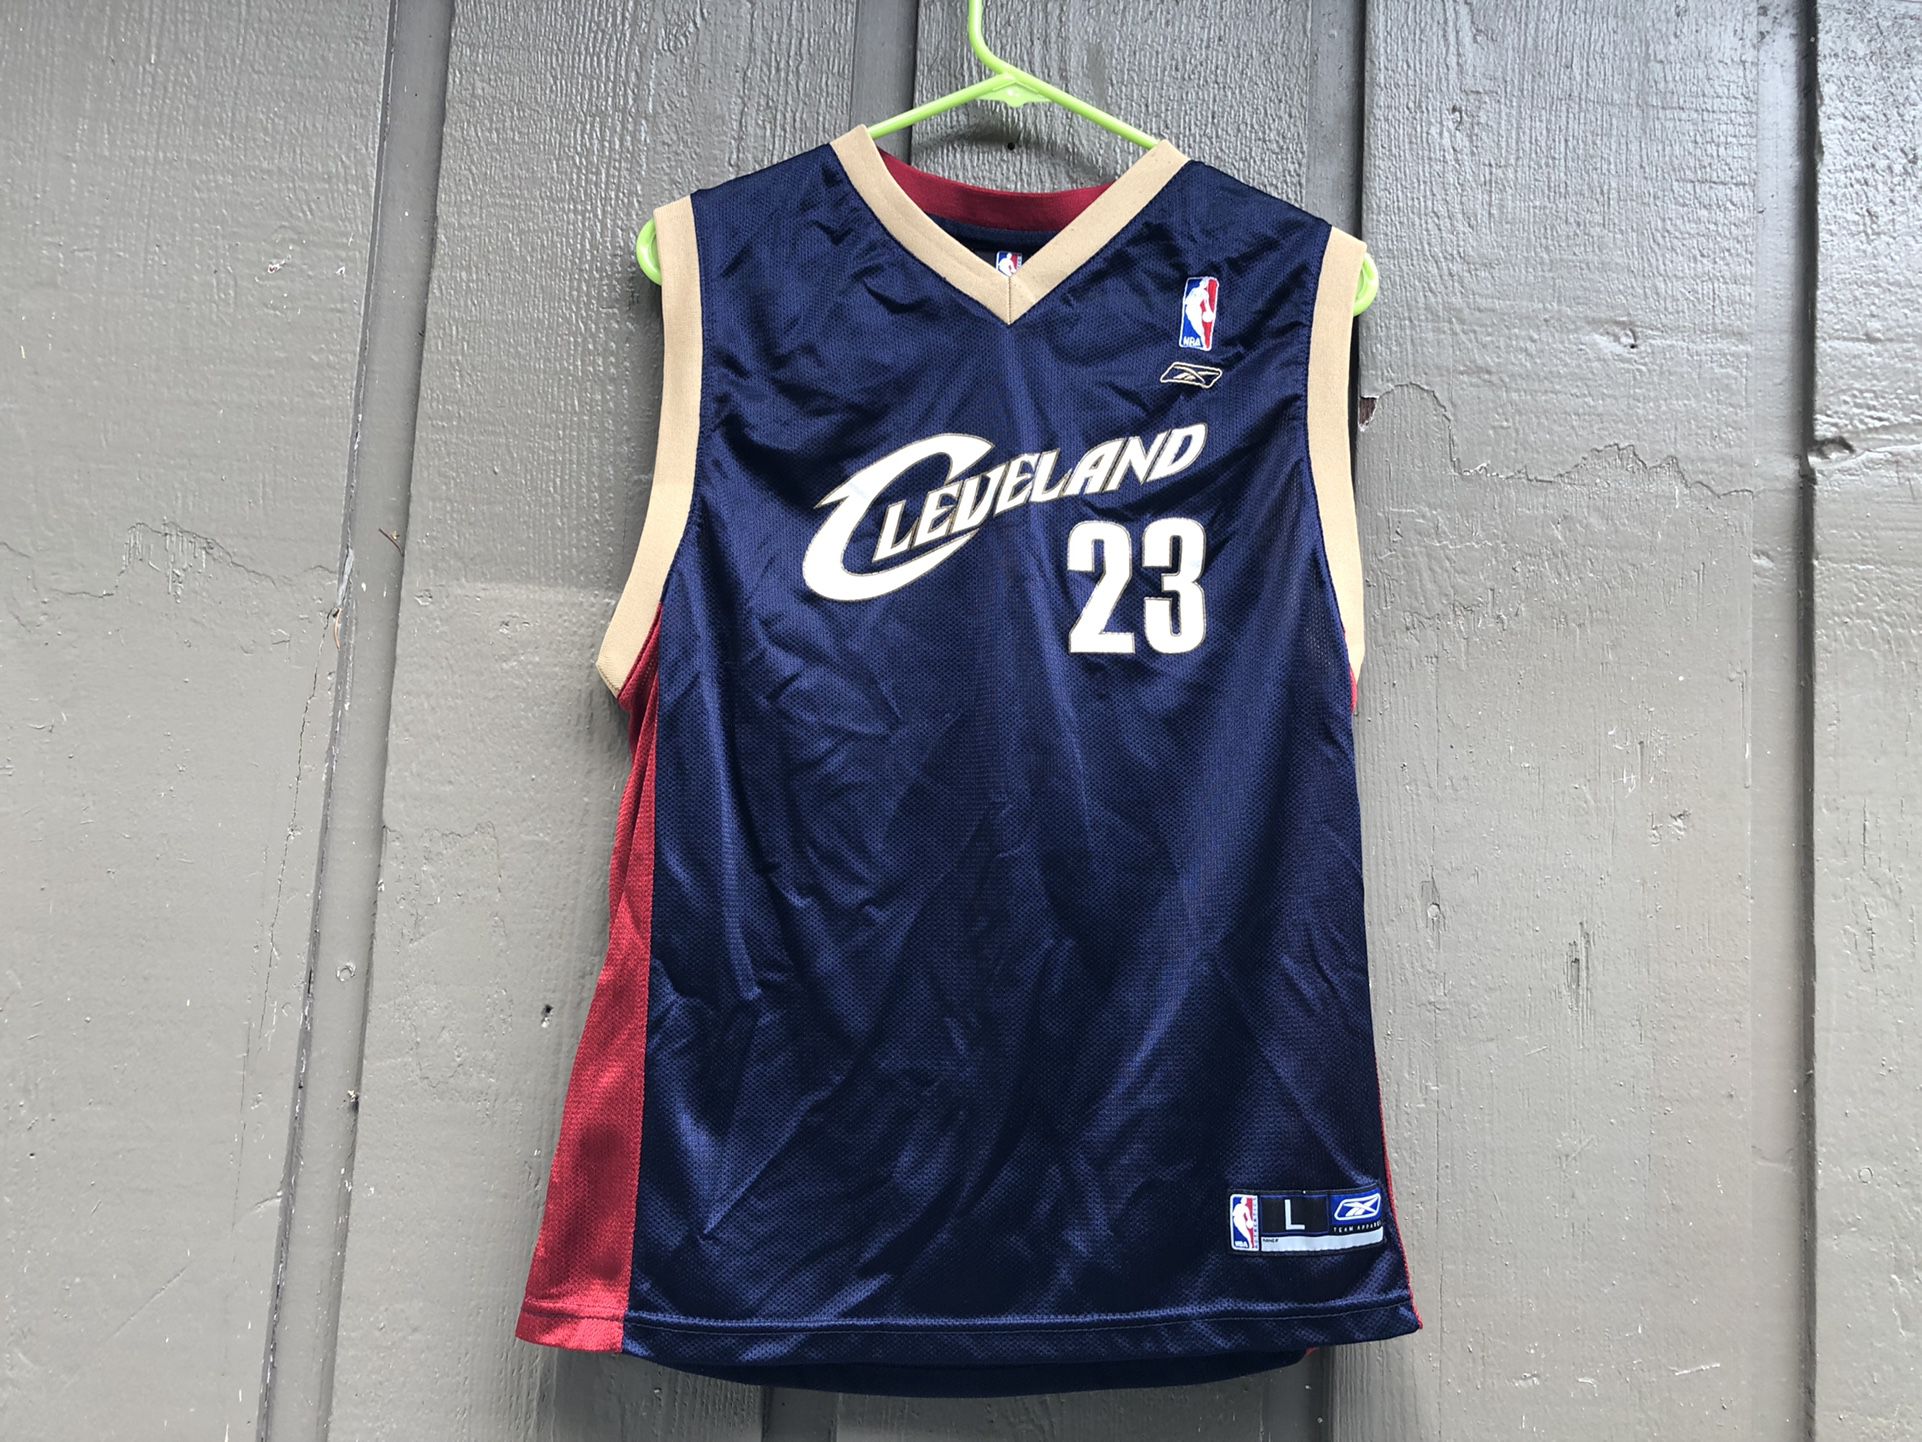 Reebok NBA Clevelan #23 James Youth's Jersey Size Large